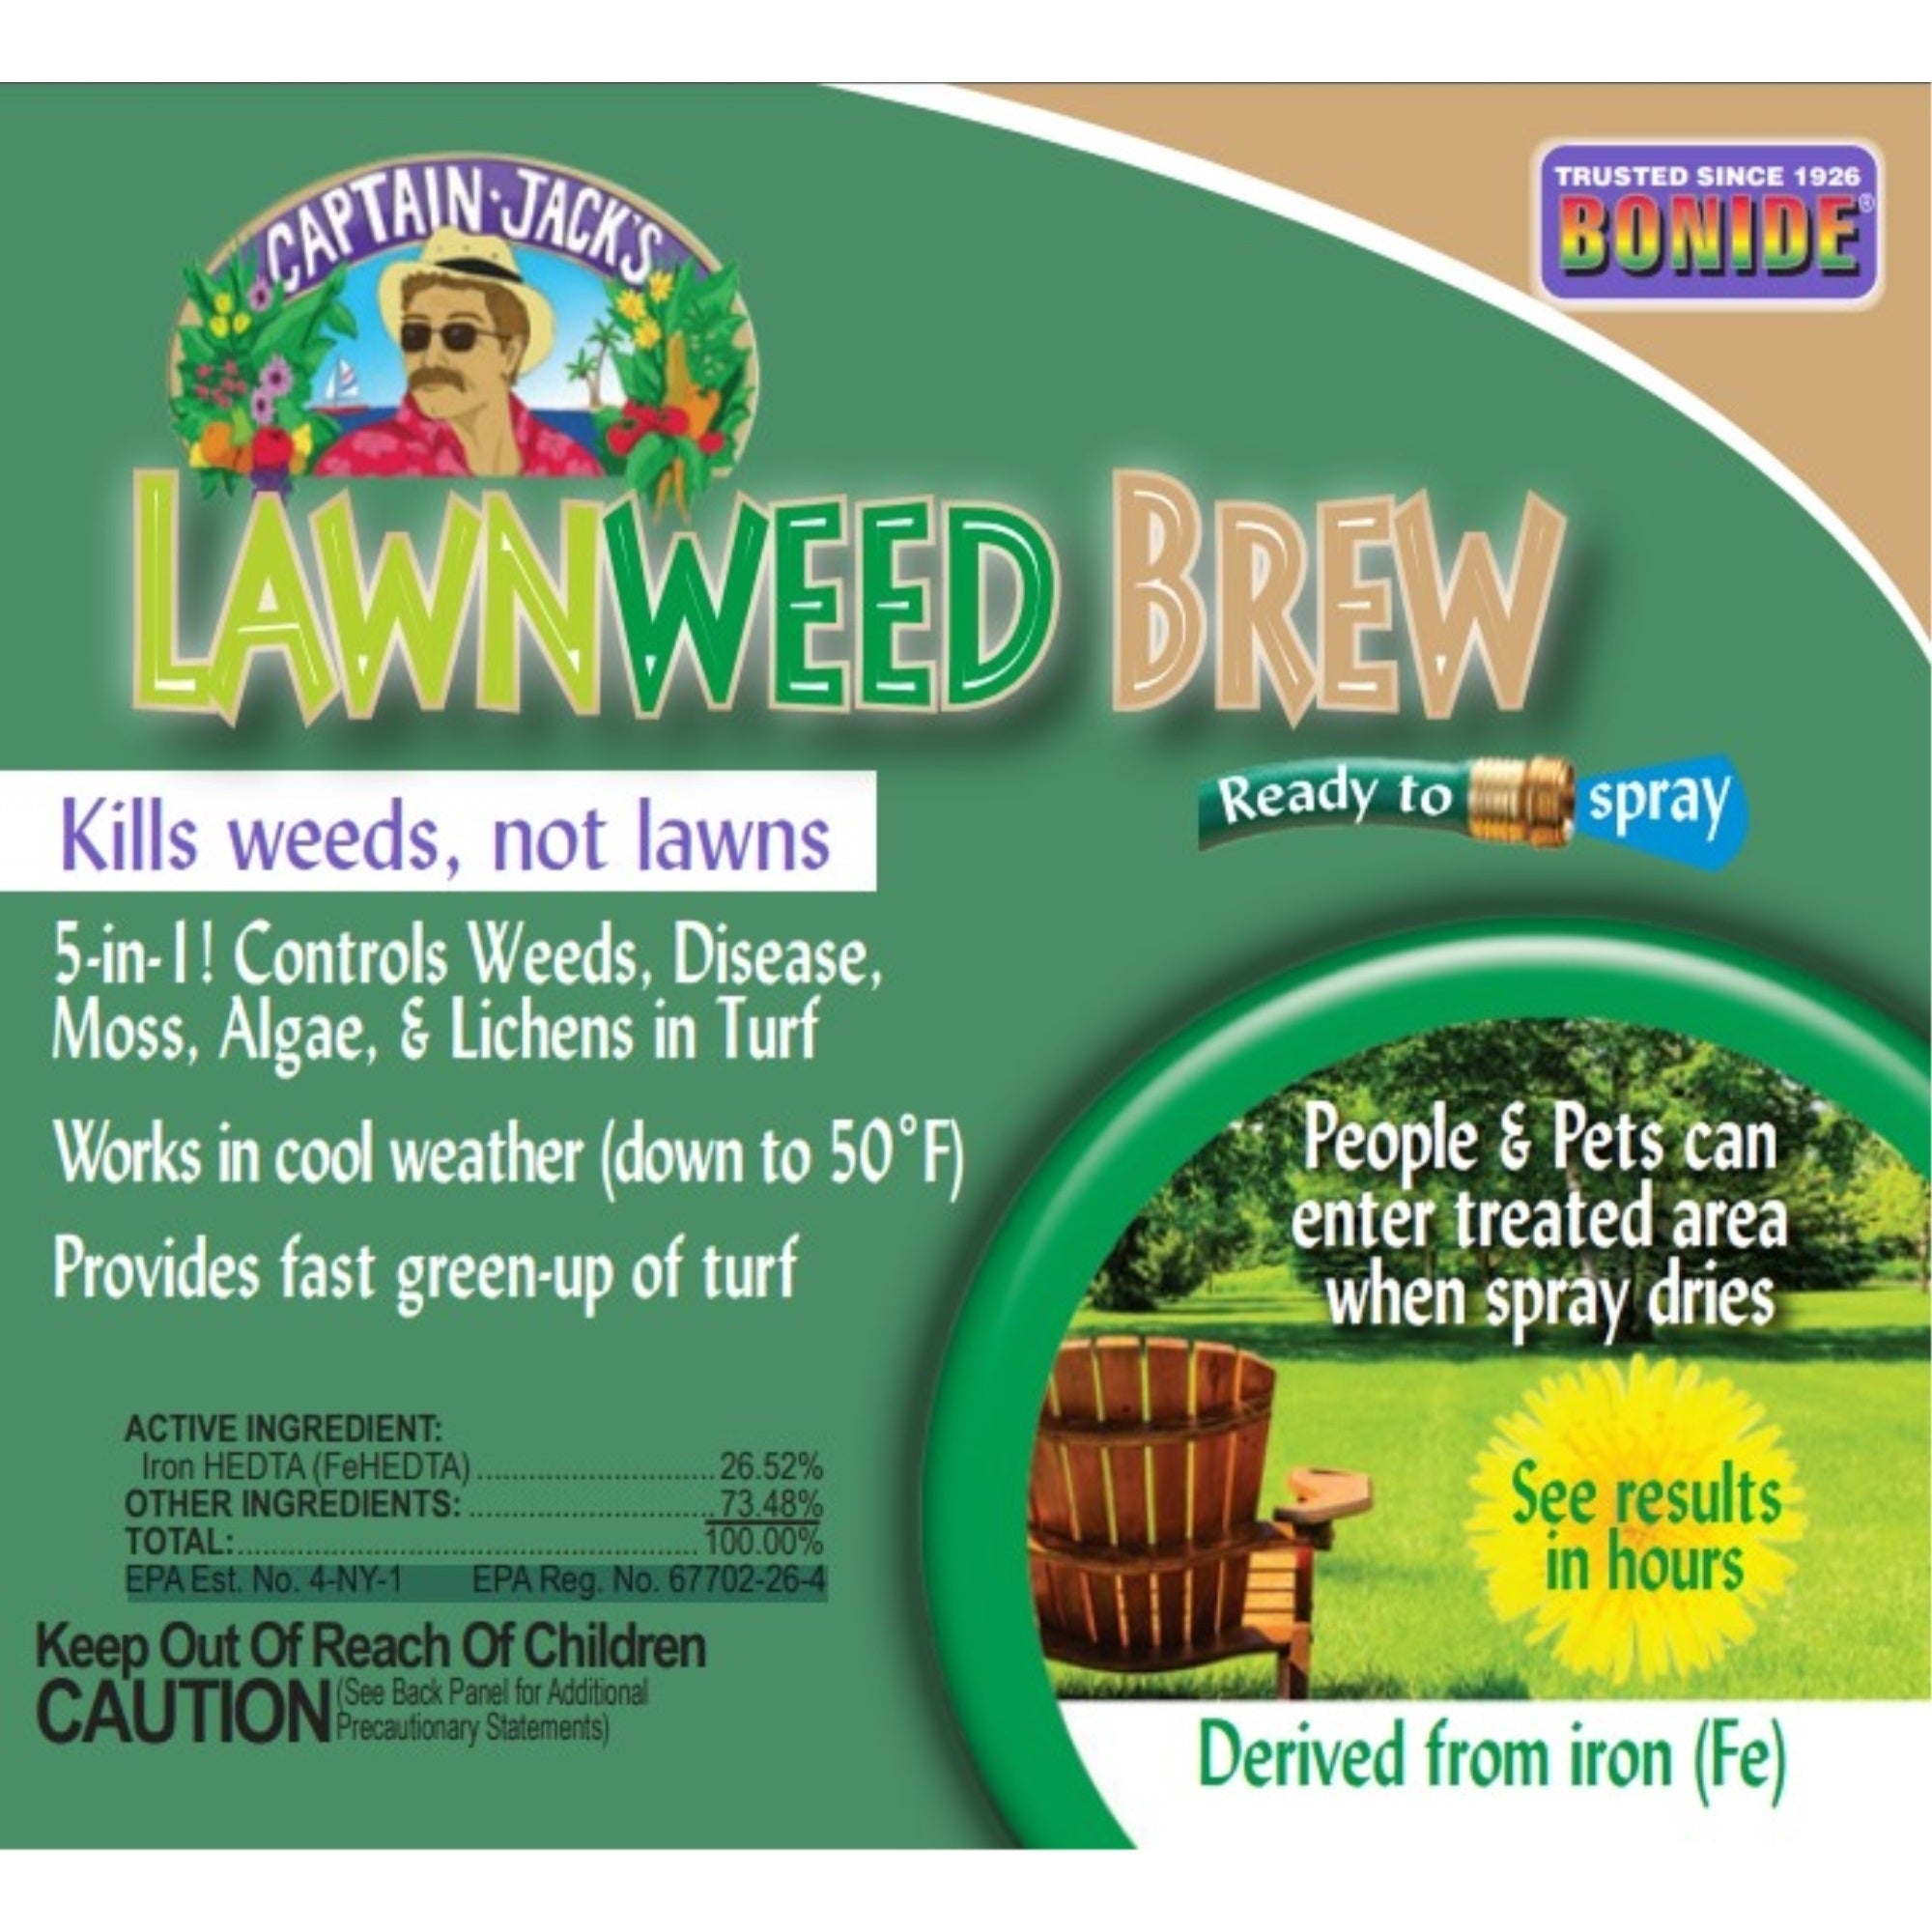 Bonide Captain Jack LawnWeed Brew for Weed Control, RTU Hose End Spray, 32 oz